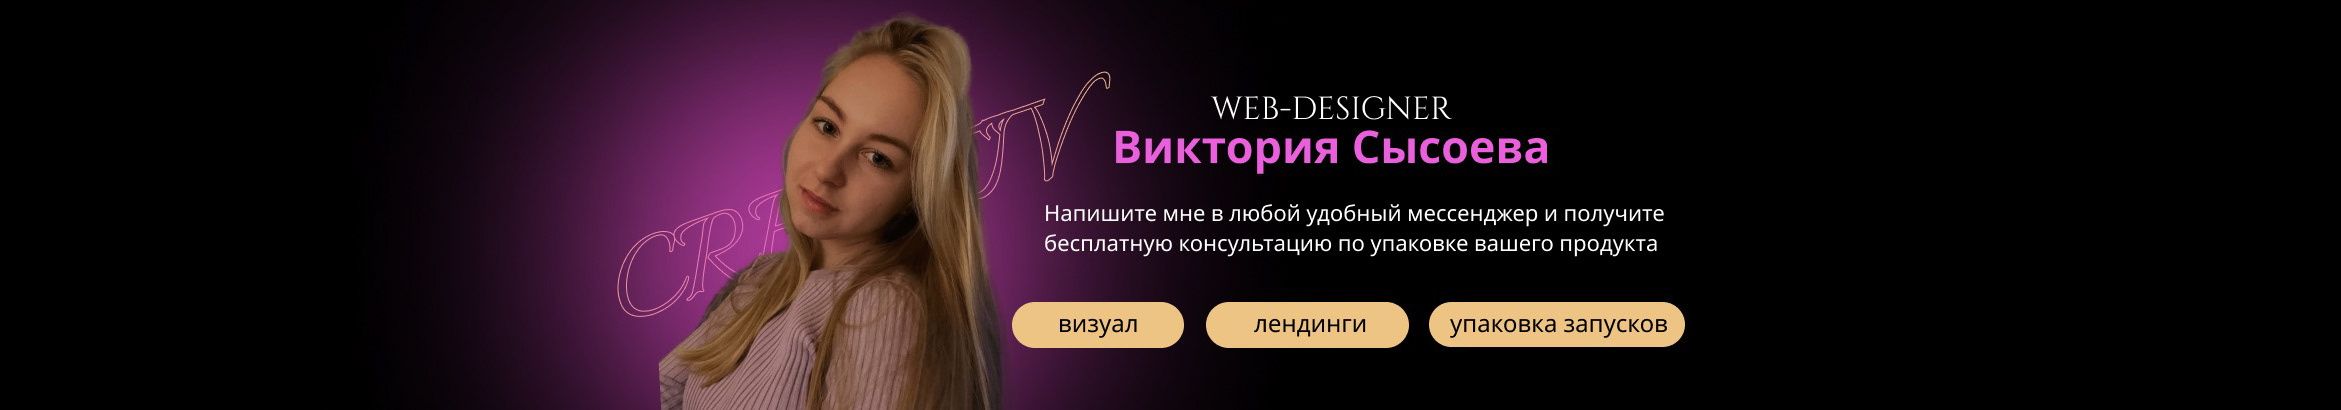 Profielbanner van Viktoria Sysoeva